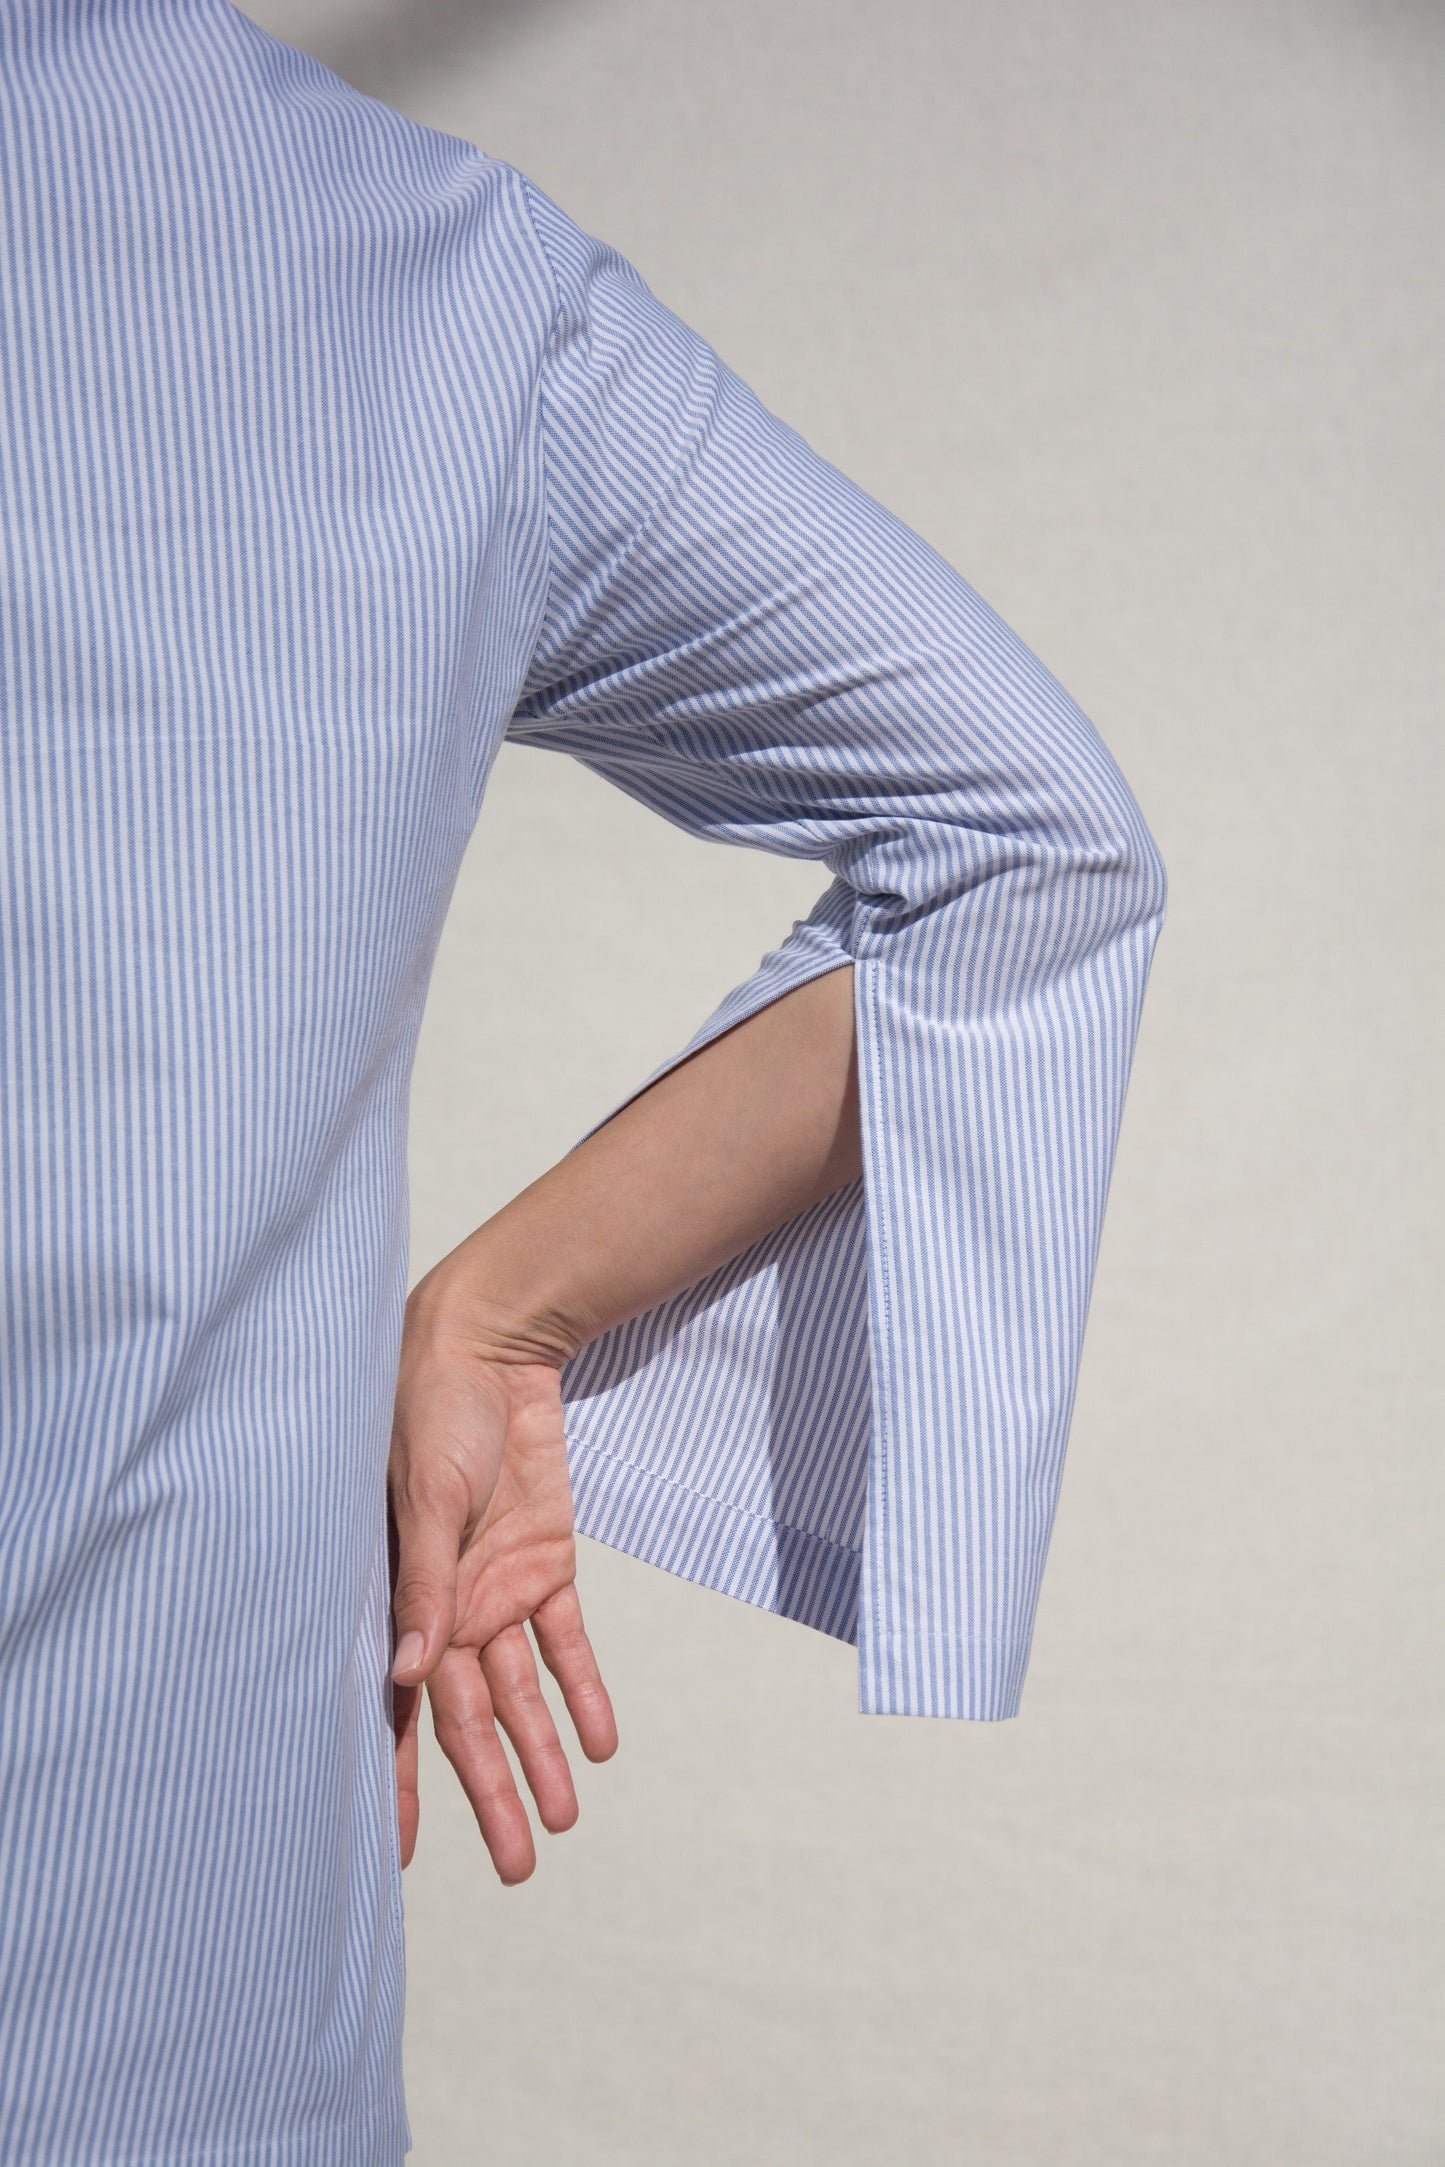 Detail image of woman's arm showing slit in sleeve. Indigo stripe cotton.